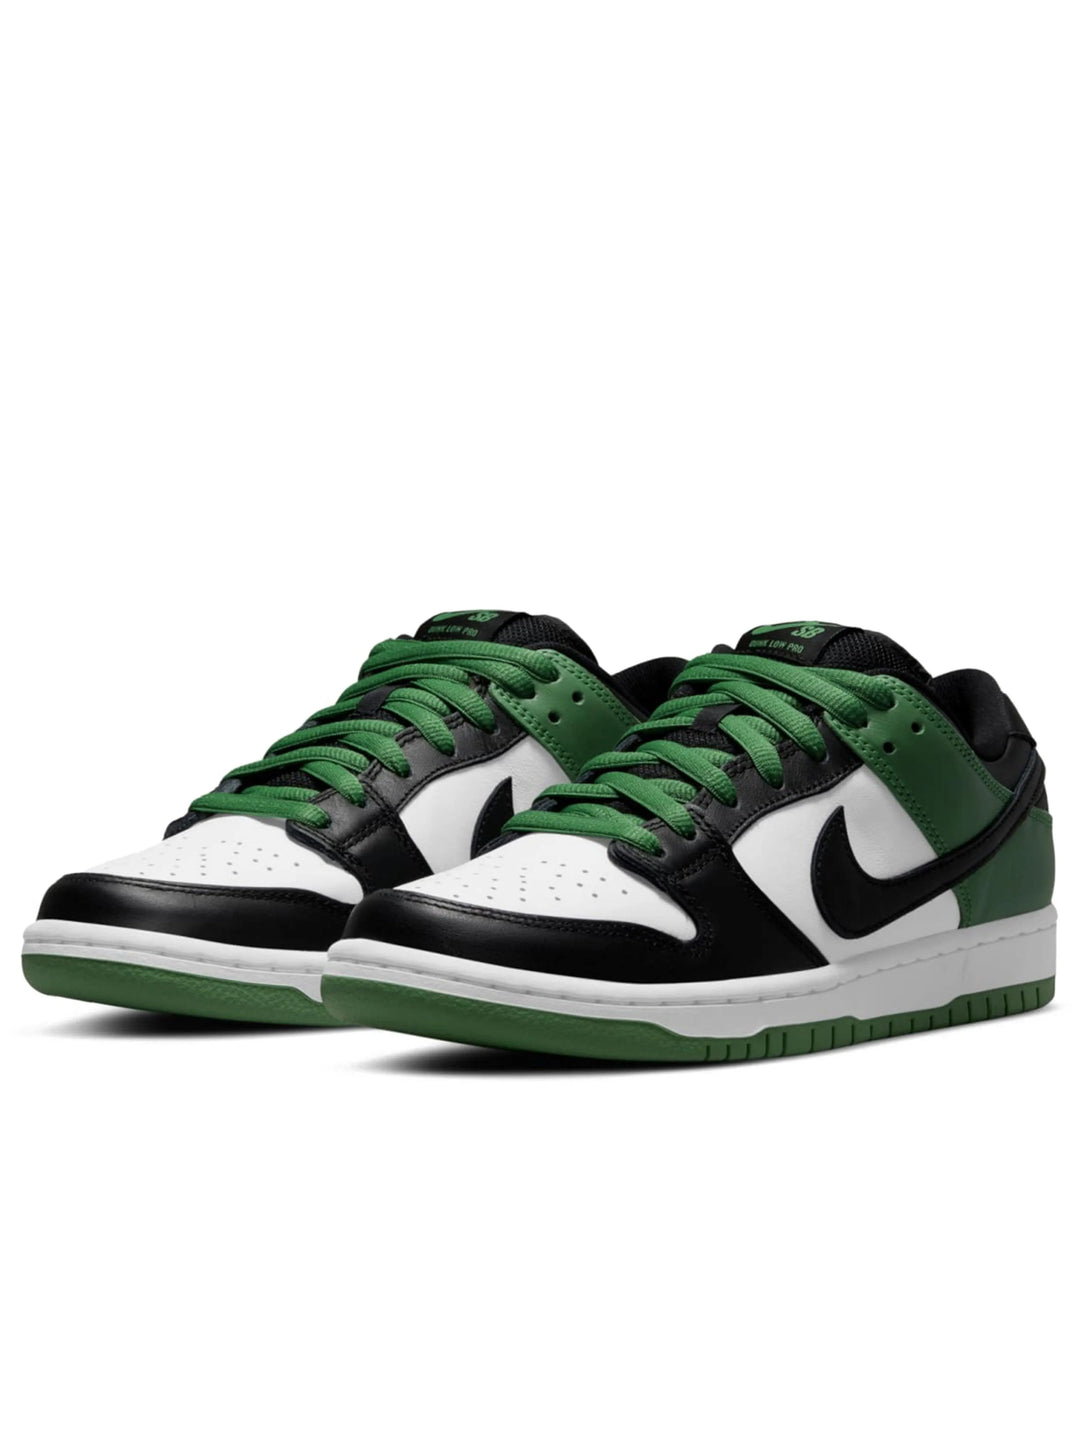 Nike Dunk Low Pro SB Classic Green Prior